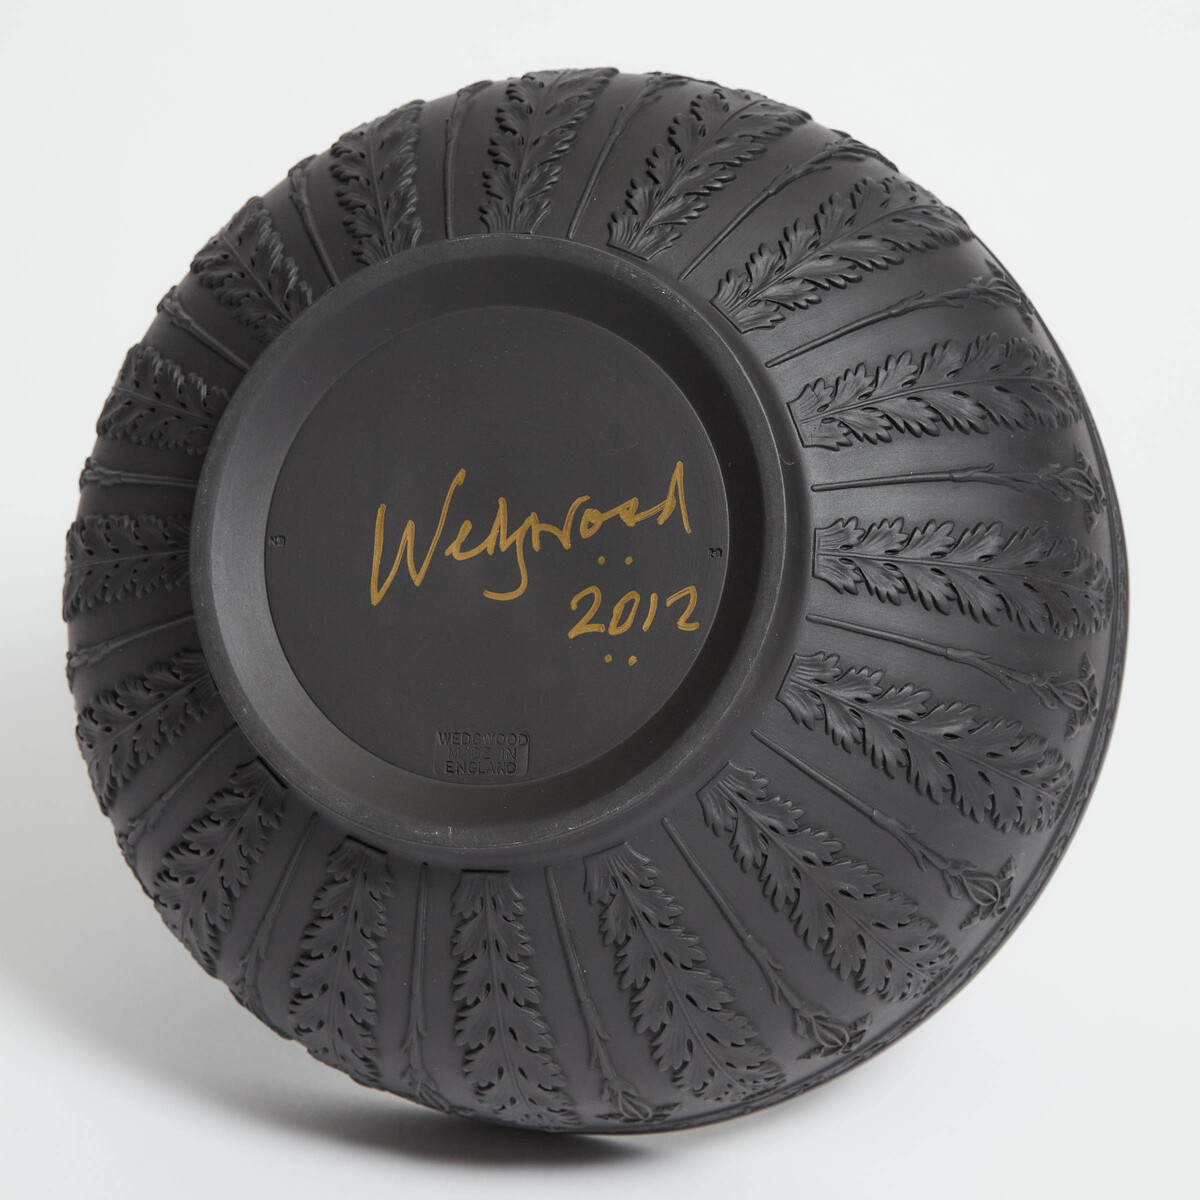 Wedgwood Black Basalt 'Acanthus' Bowl, 2012, height 4.3 in — 11 cm, diameter 10 in — 25.5 cm - Image 3 of 3